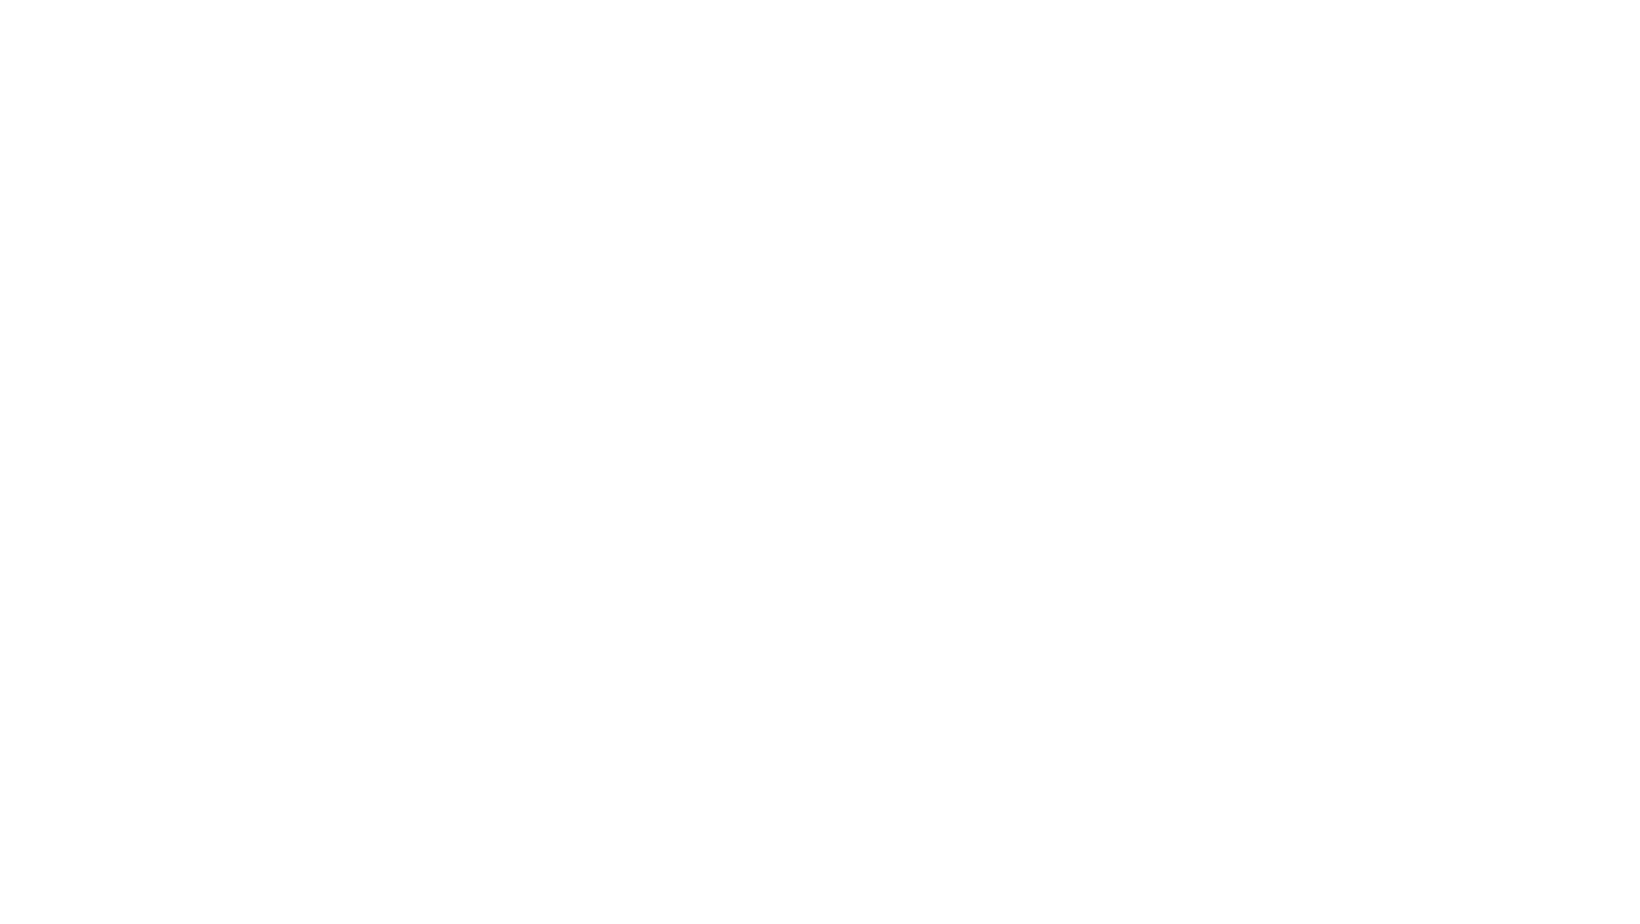 Pizzeria Leon d’Oro